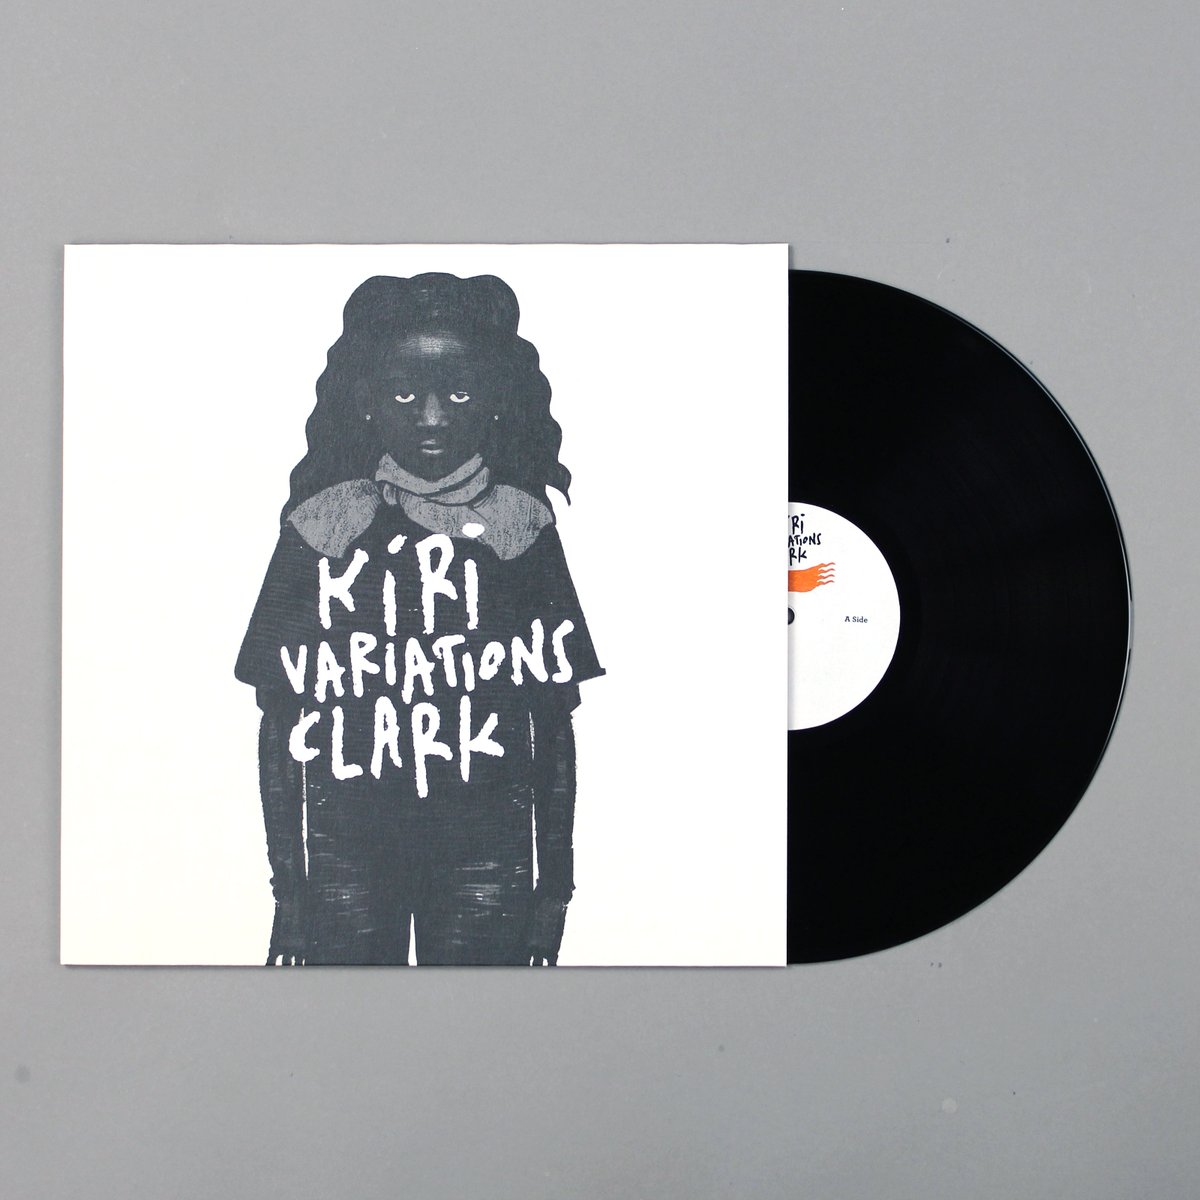 Clark | Kiri Variations album cover vinyl